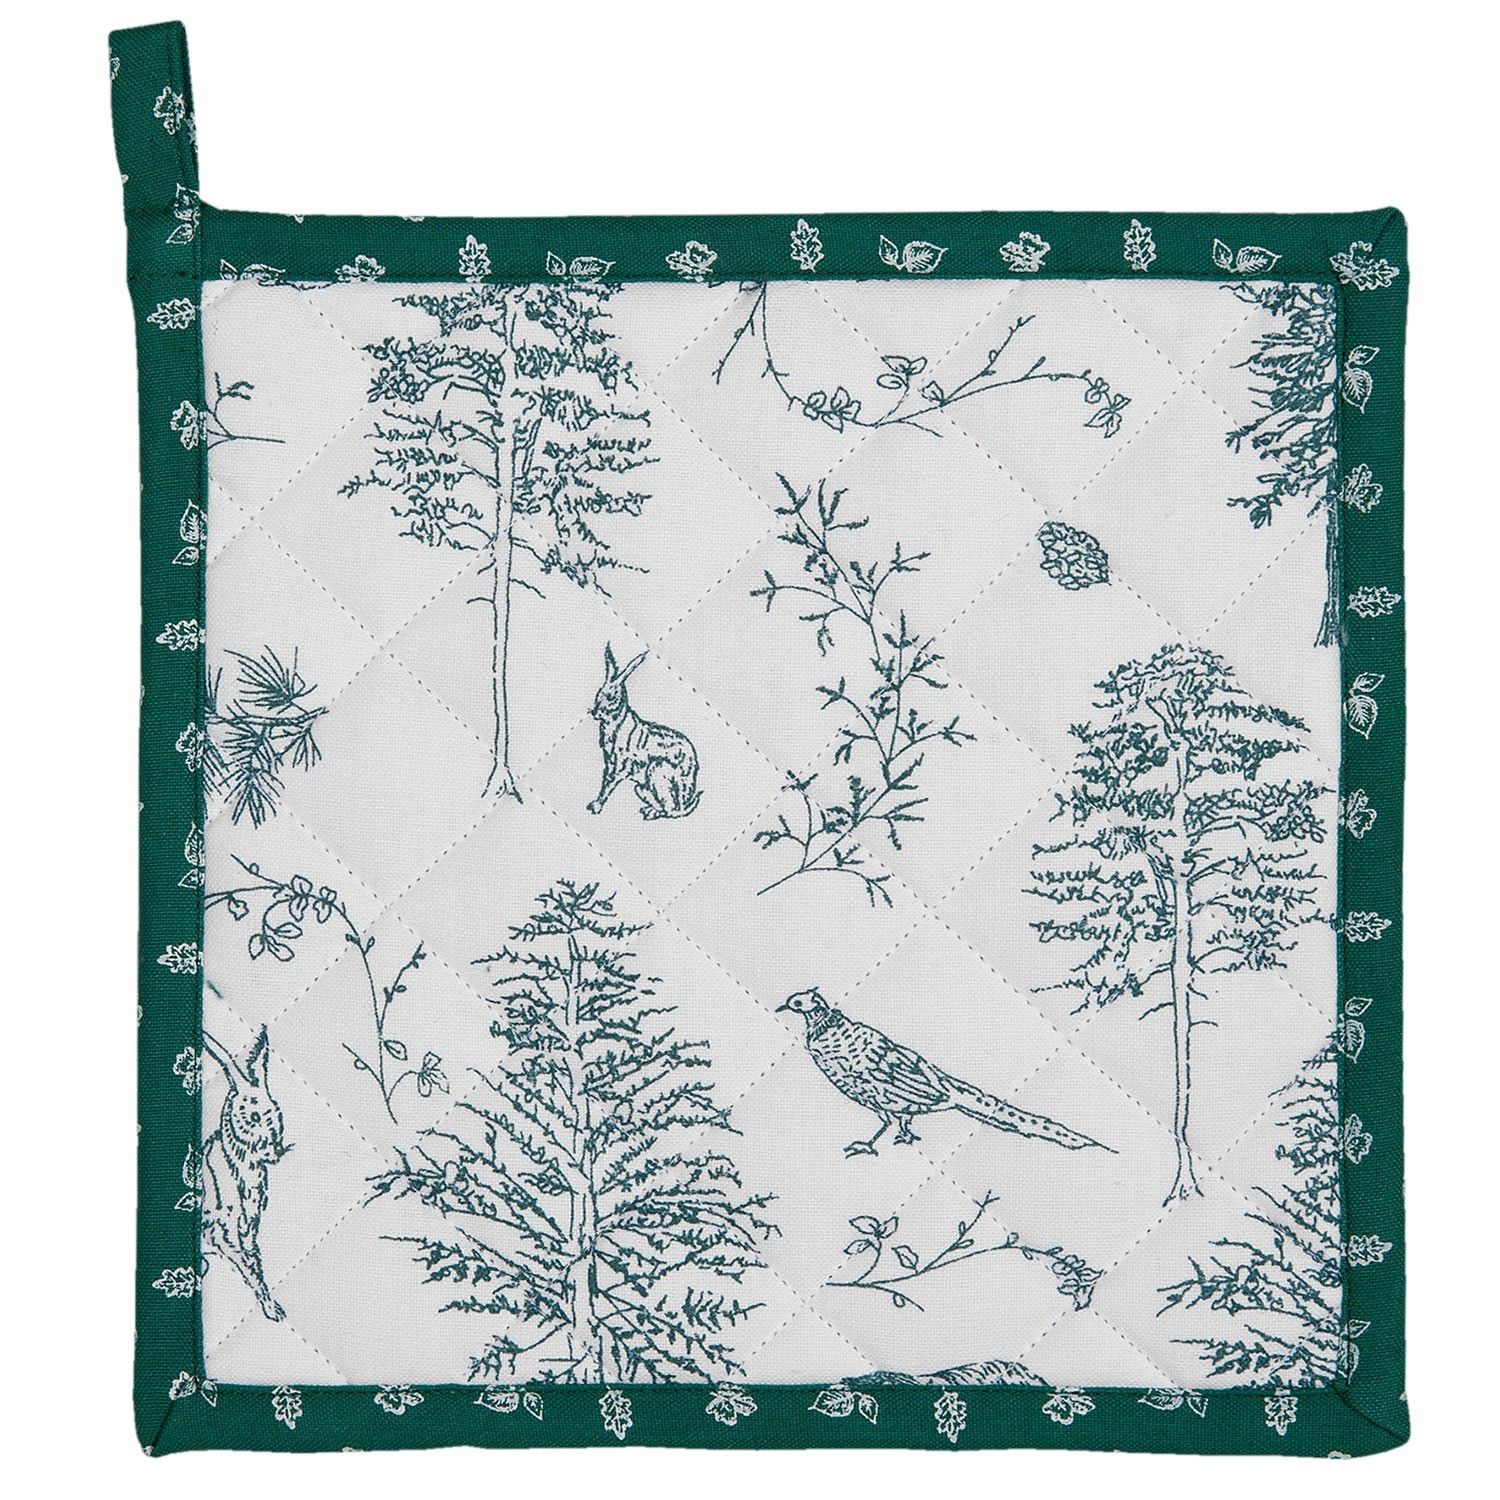 Chňapka - podložka Wild Forest - 20*20 cm Clayre & Eef - LaHome - vintage dekorace